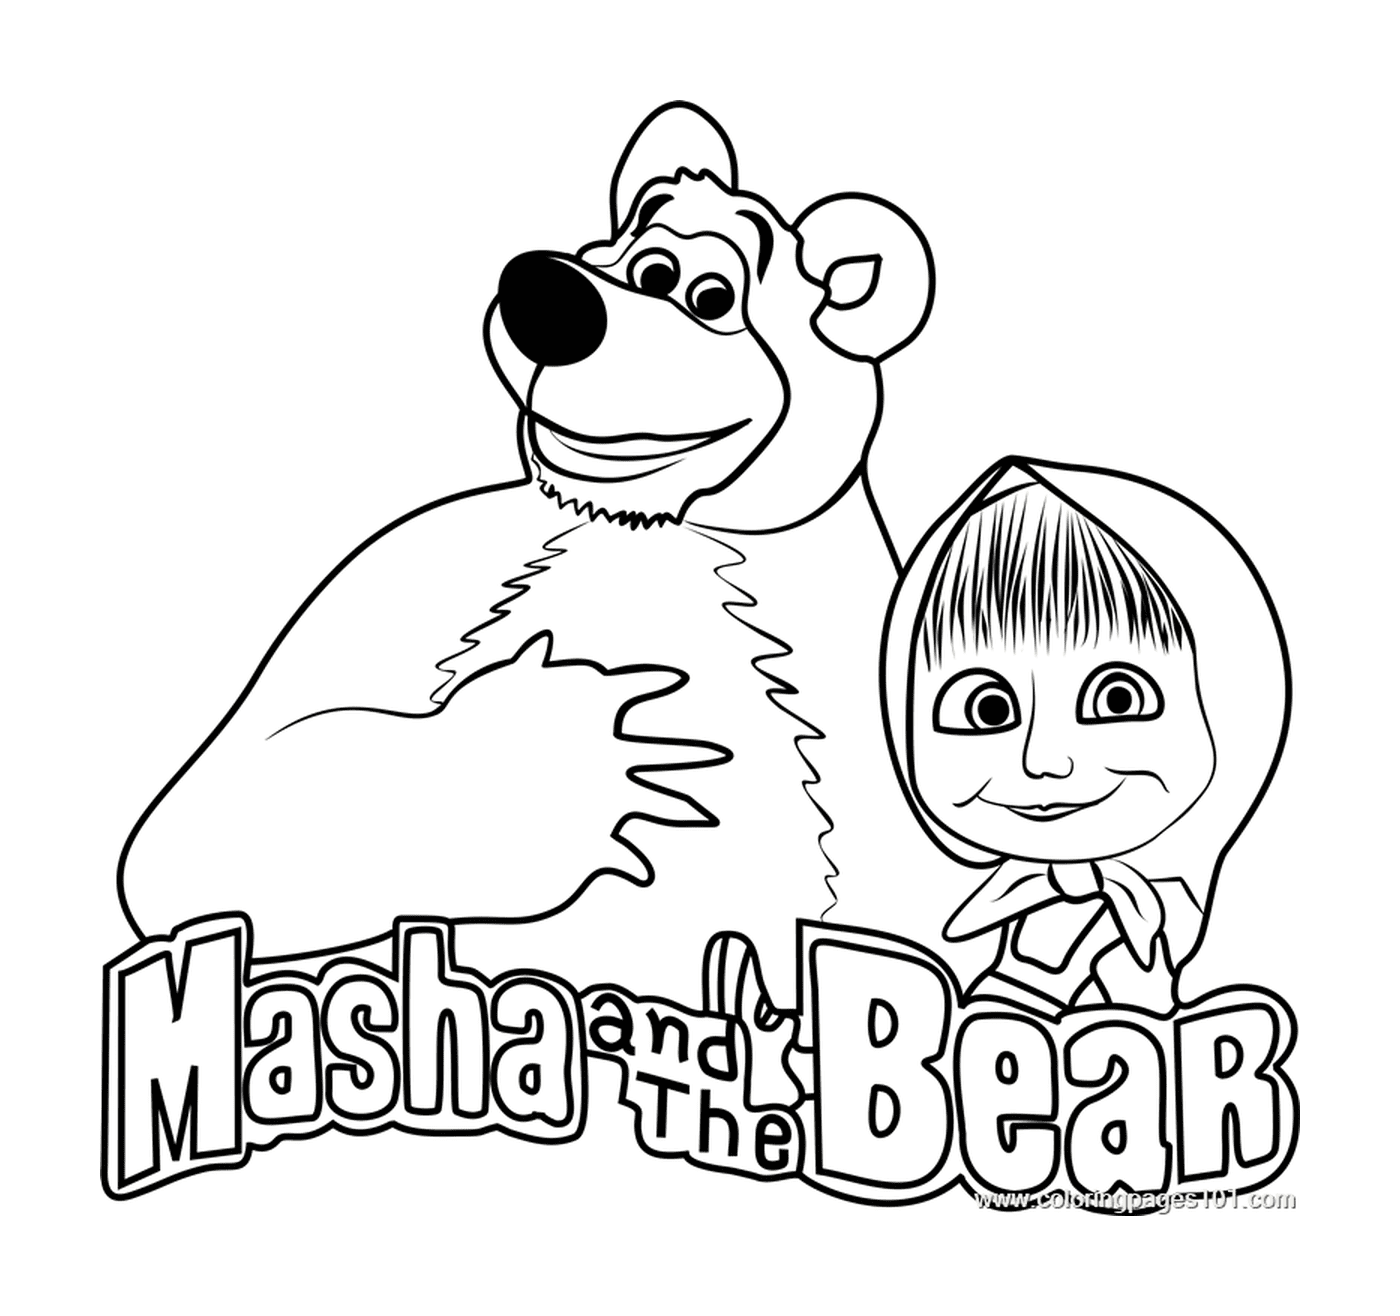   Logo Masha et Michka, un duo adorable 